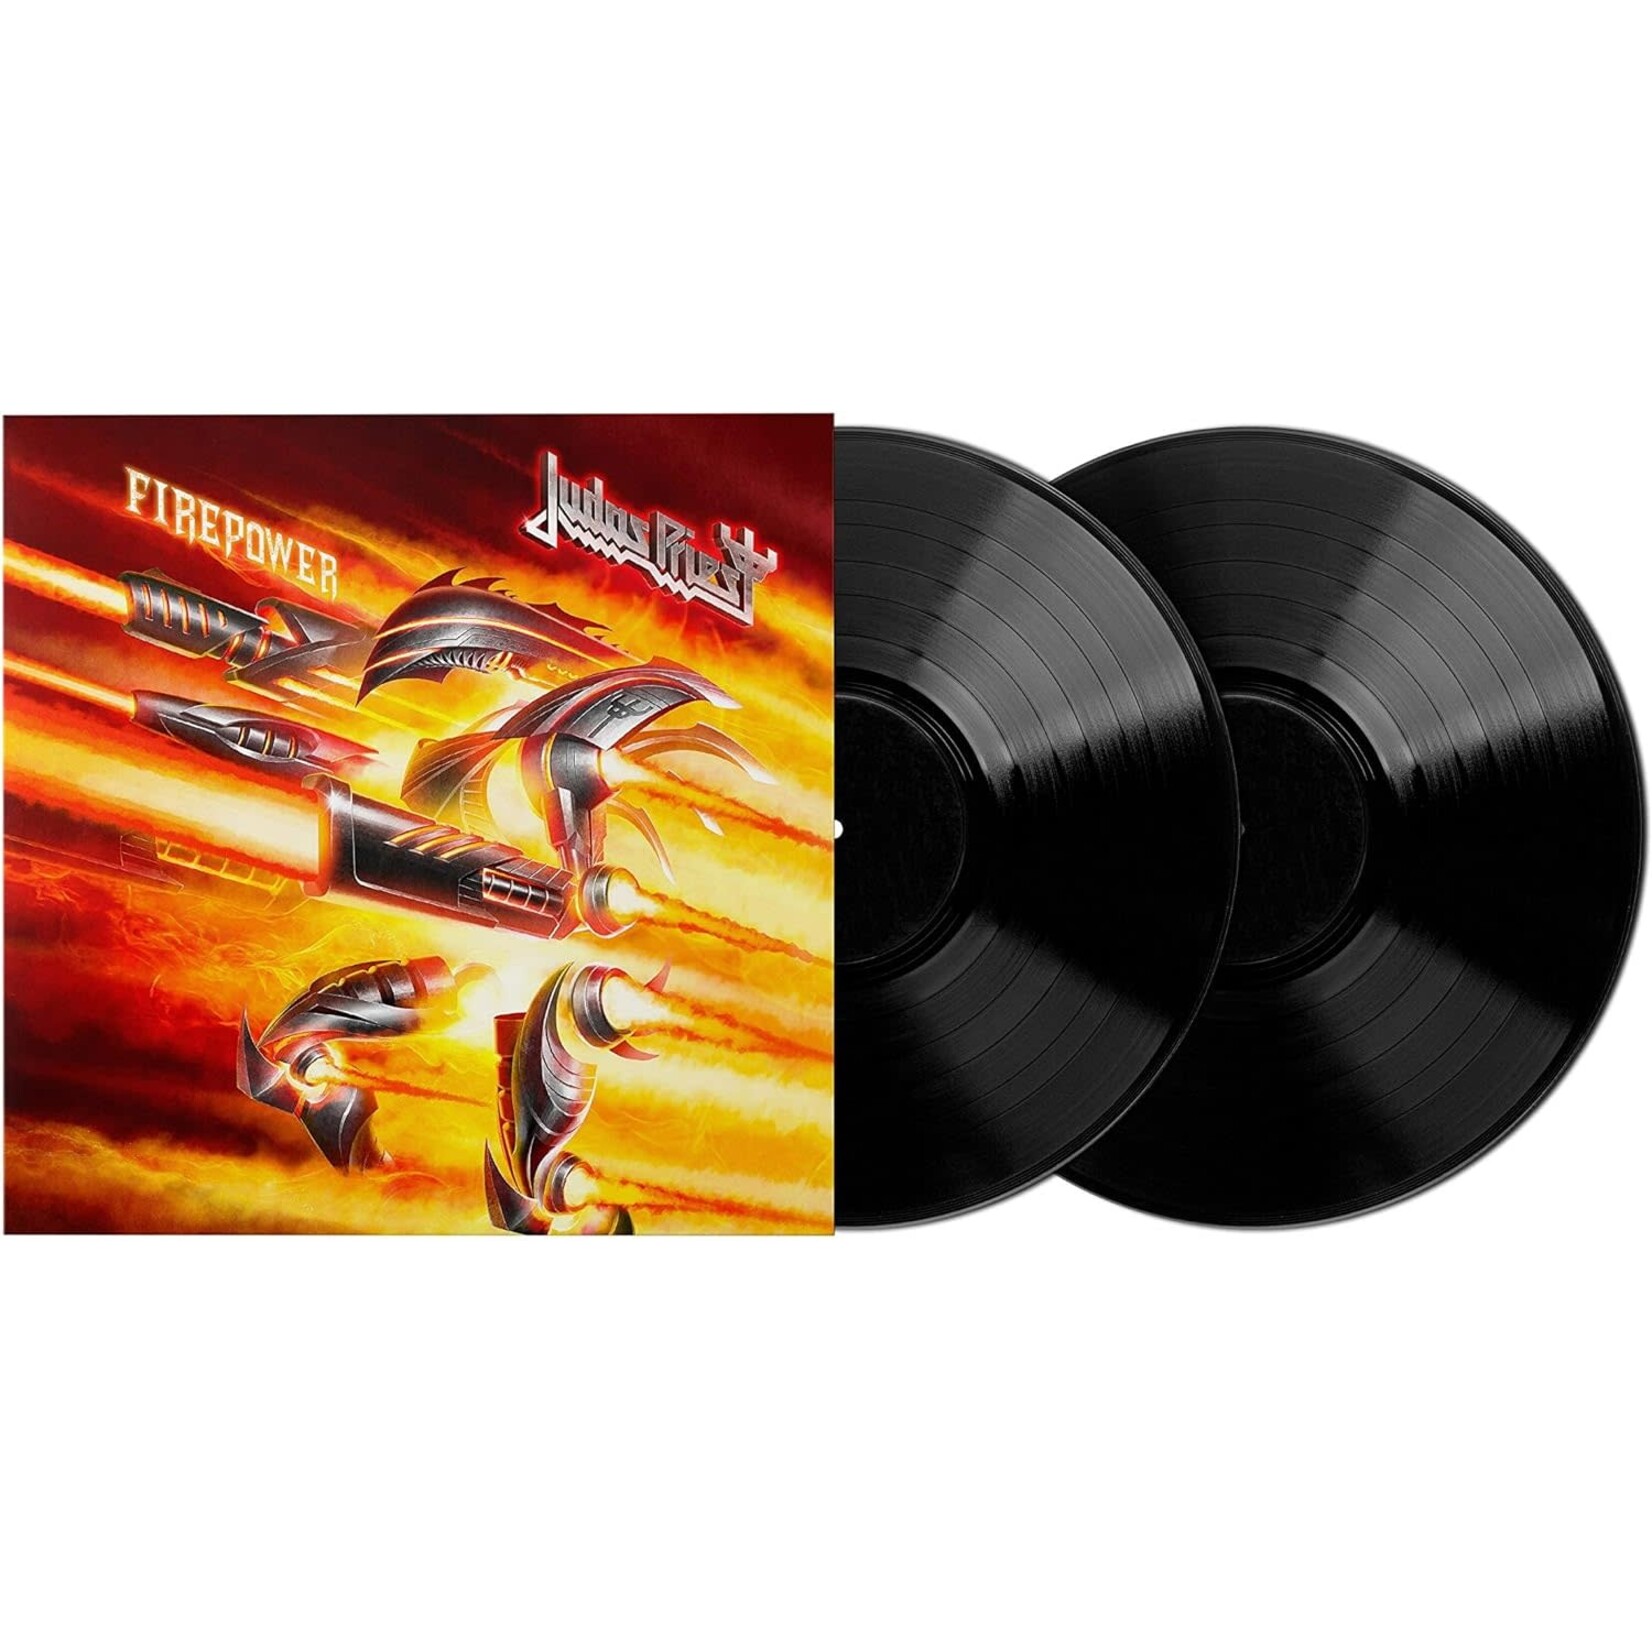 Judas Priest - Firepower [2LP]